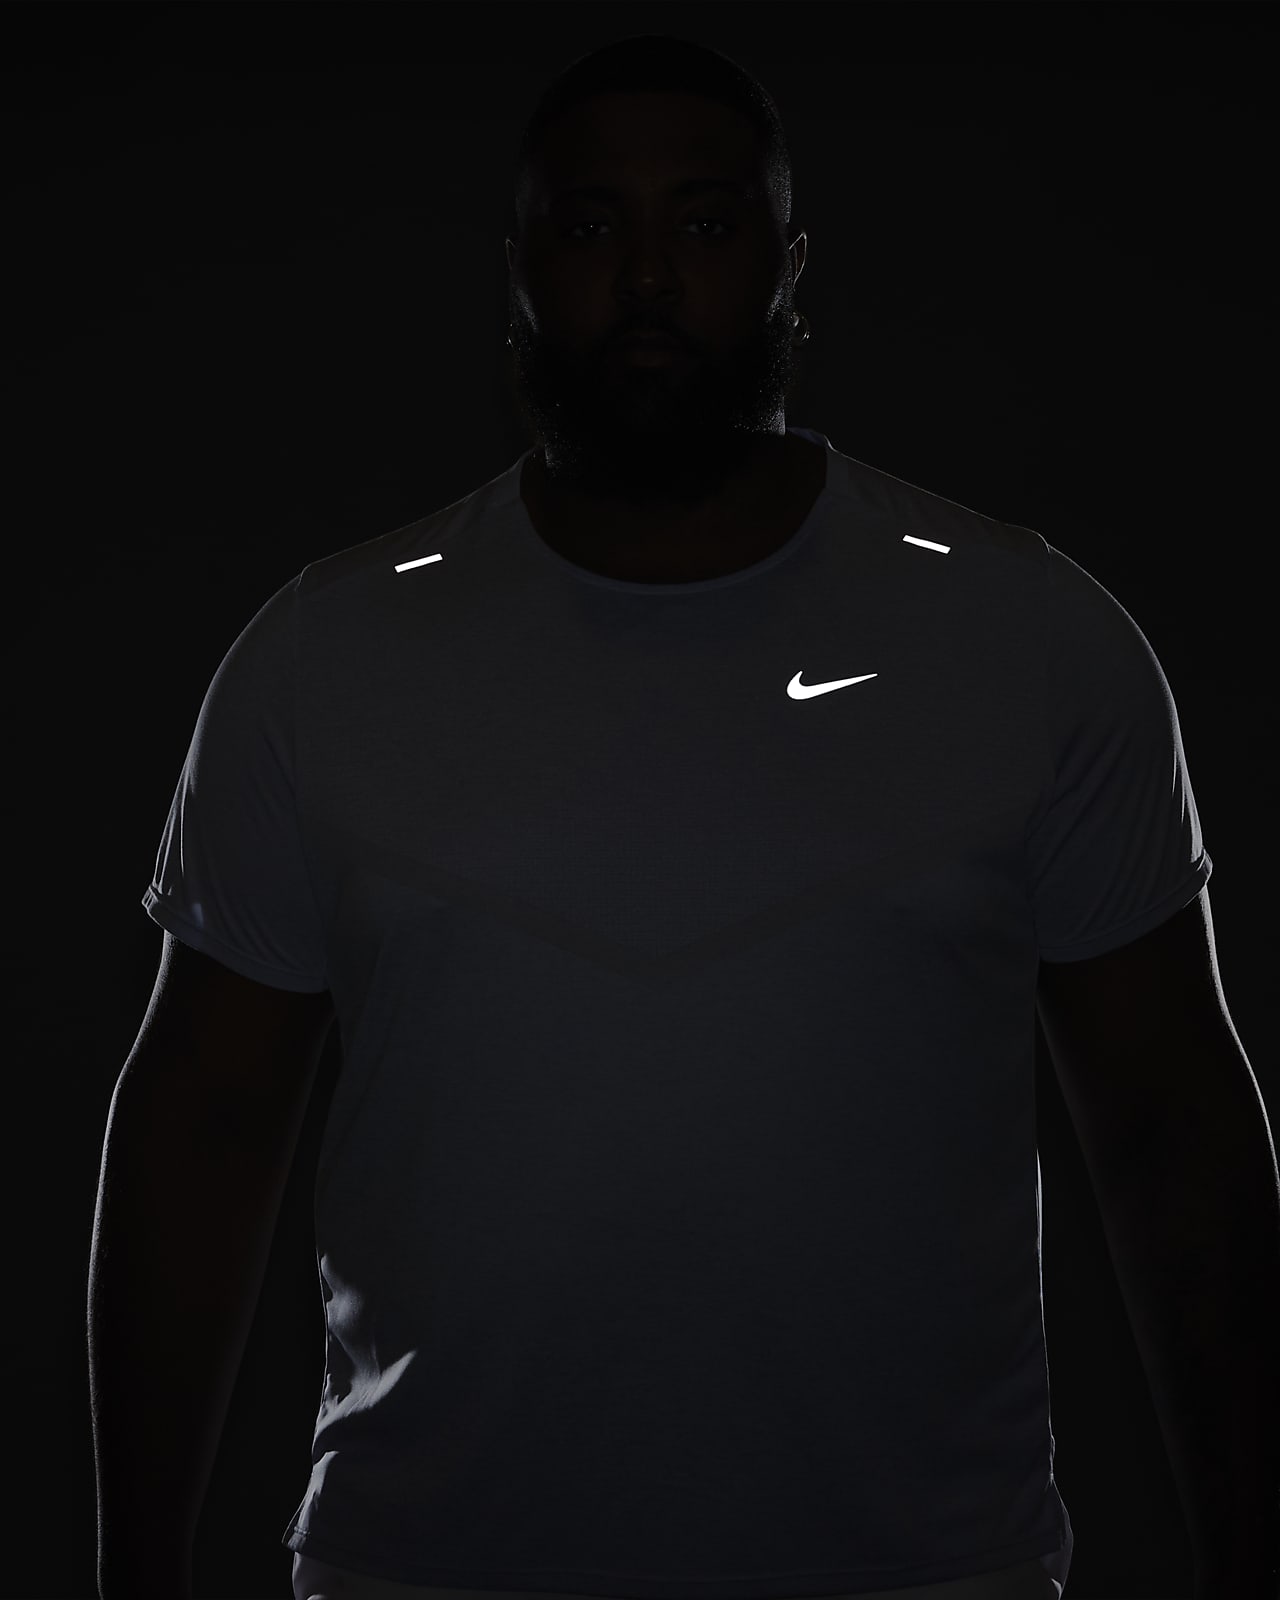 Nike Men's Dri-Fit Rise 365 Short Sleeve Running T-Shirt, Medium, White